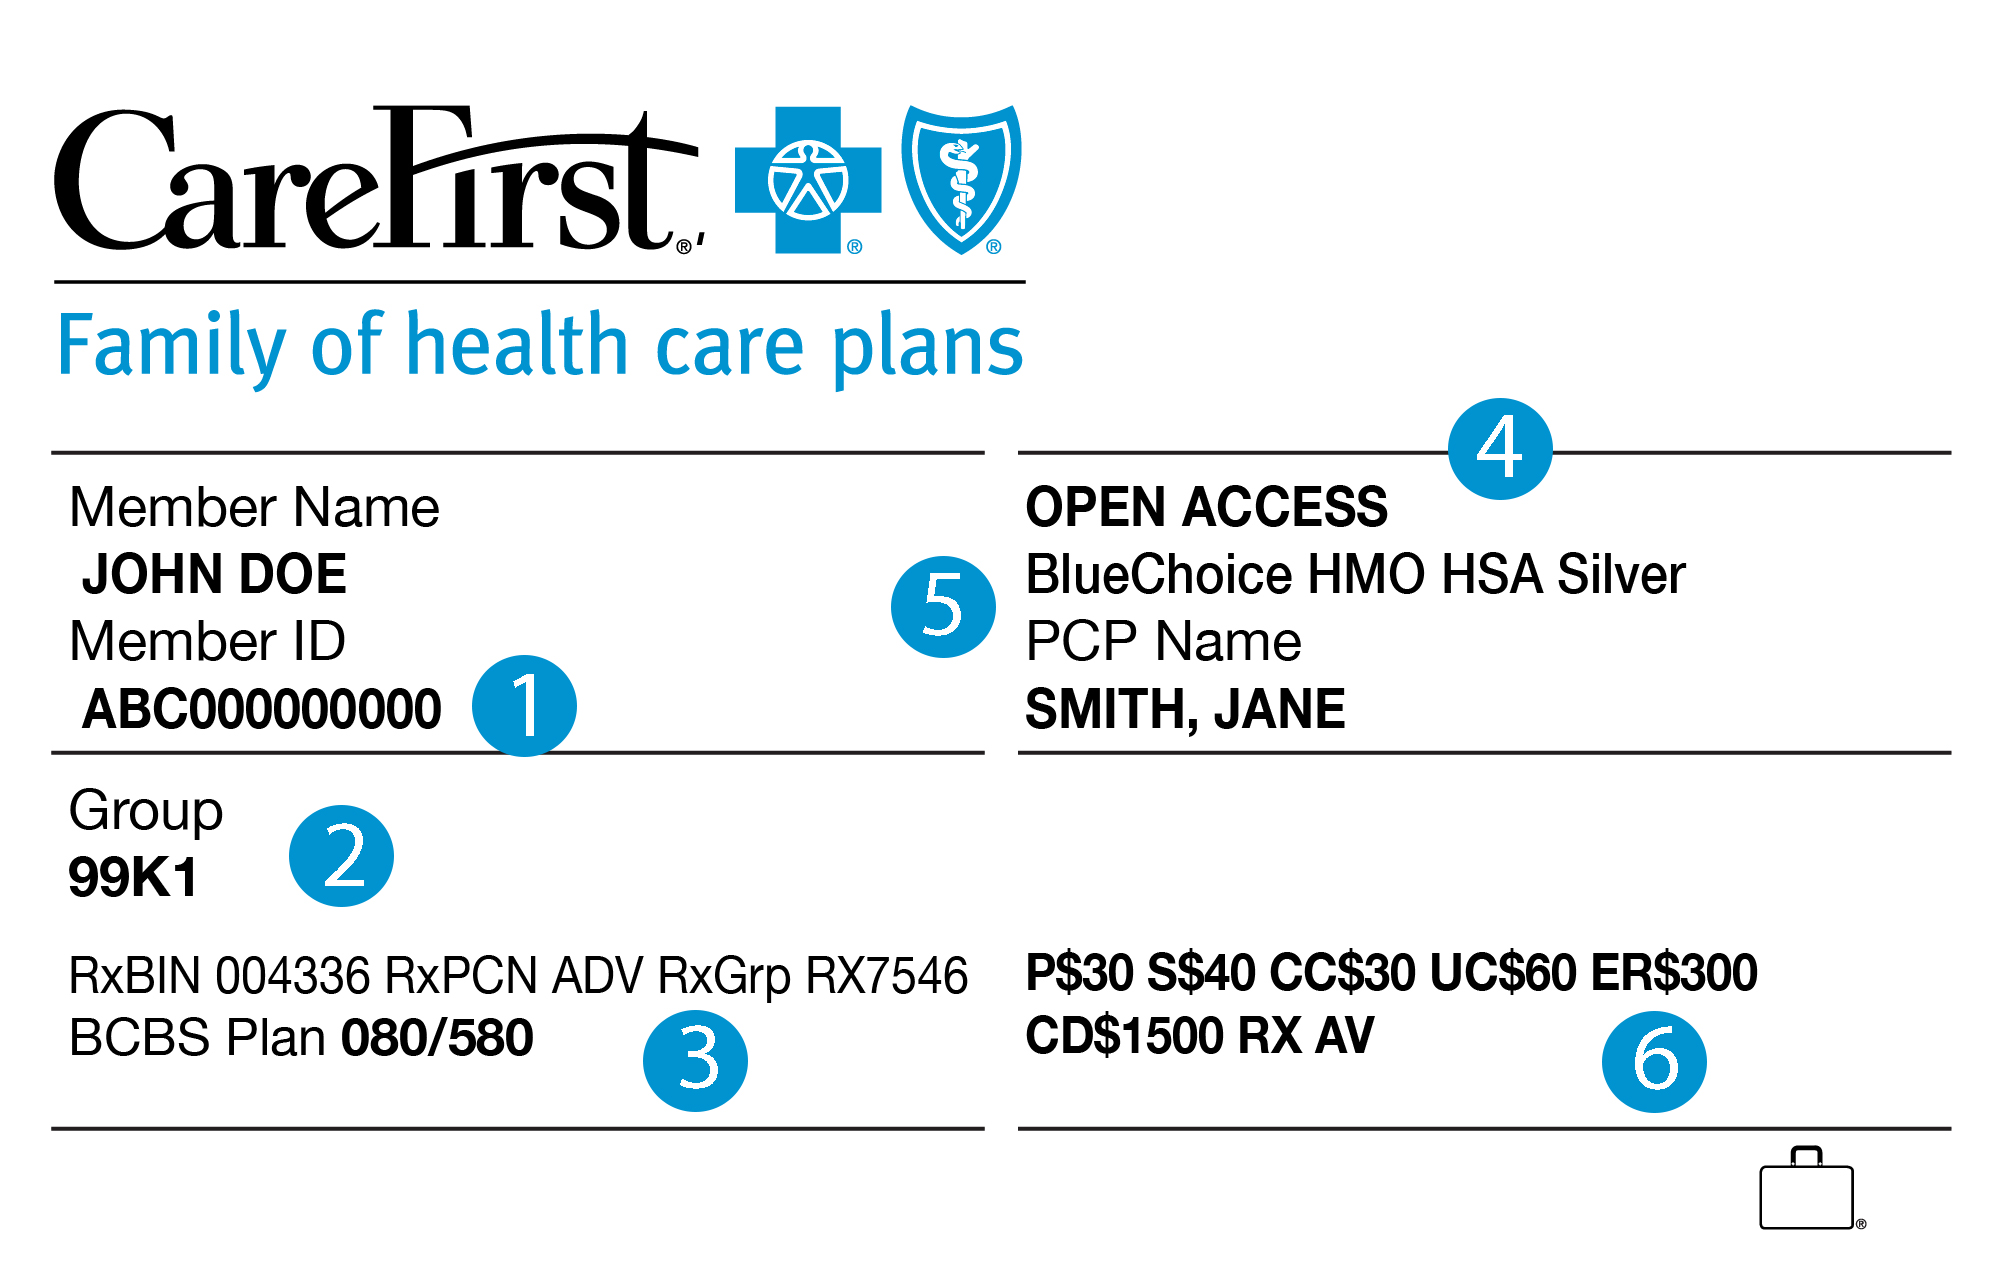 Carefirst bcbs phone number for providers centura health porter adventist hospital colorado